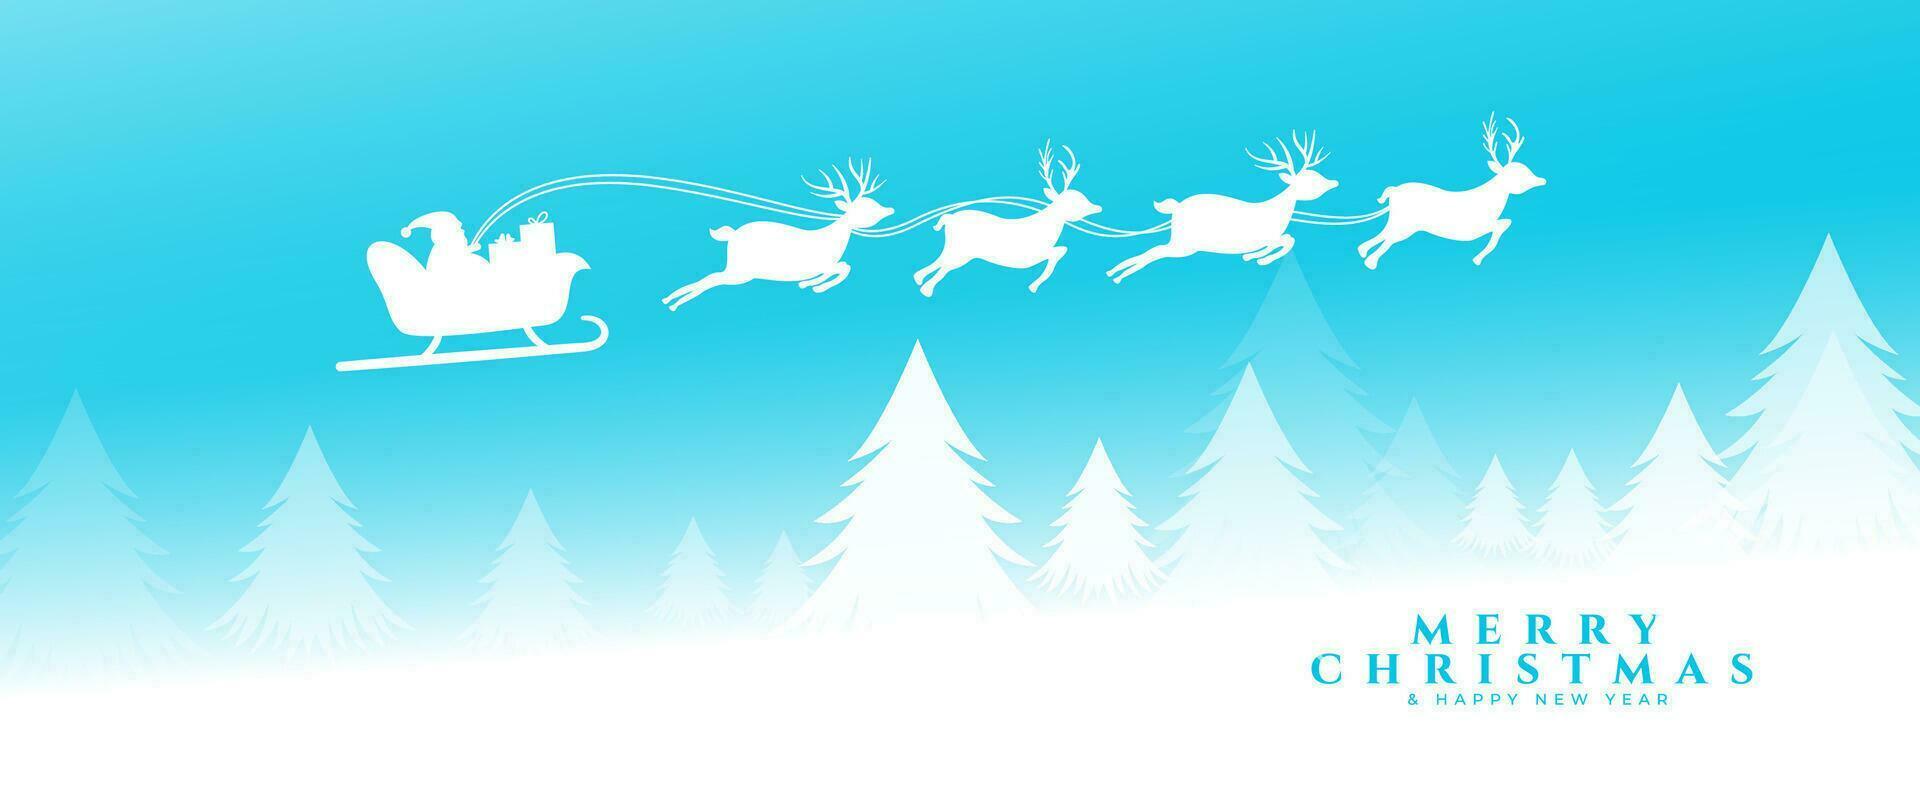 merry christmas festive celebration banner with flying santa sleigh design vector